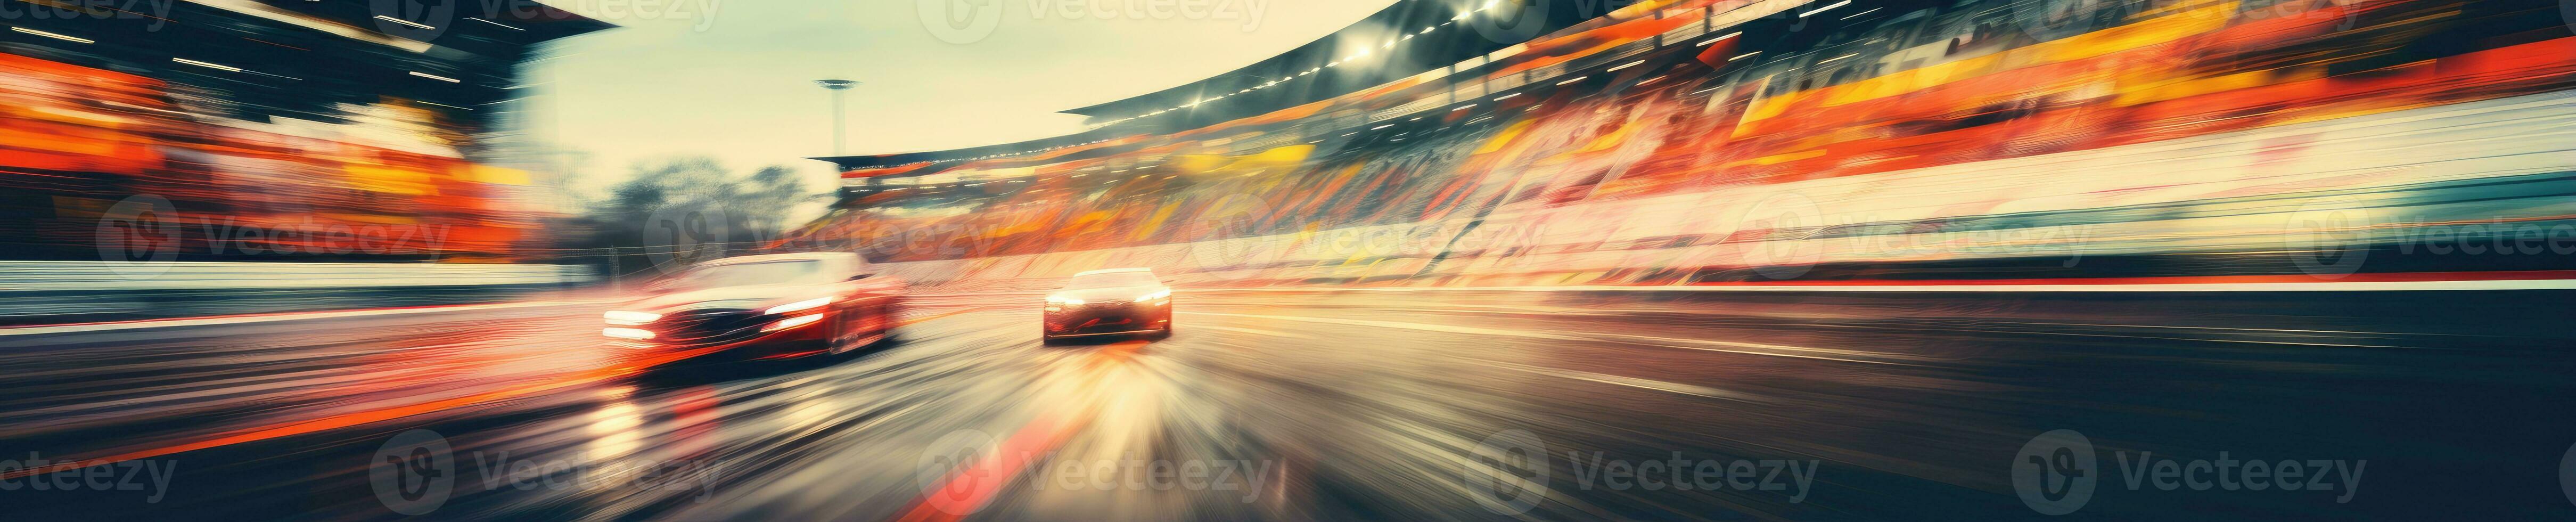 Under the night sky, a sleek sports car speeds along a racetrack. Created with AI photo